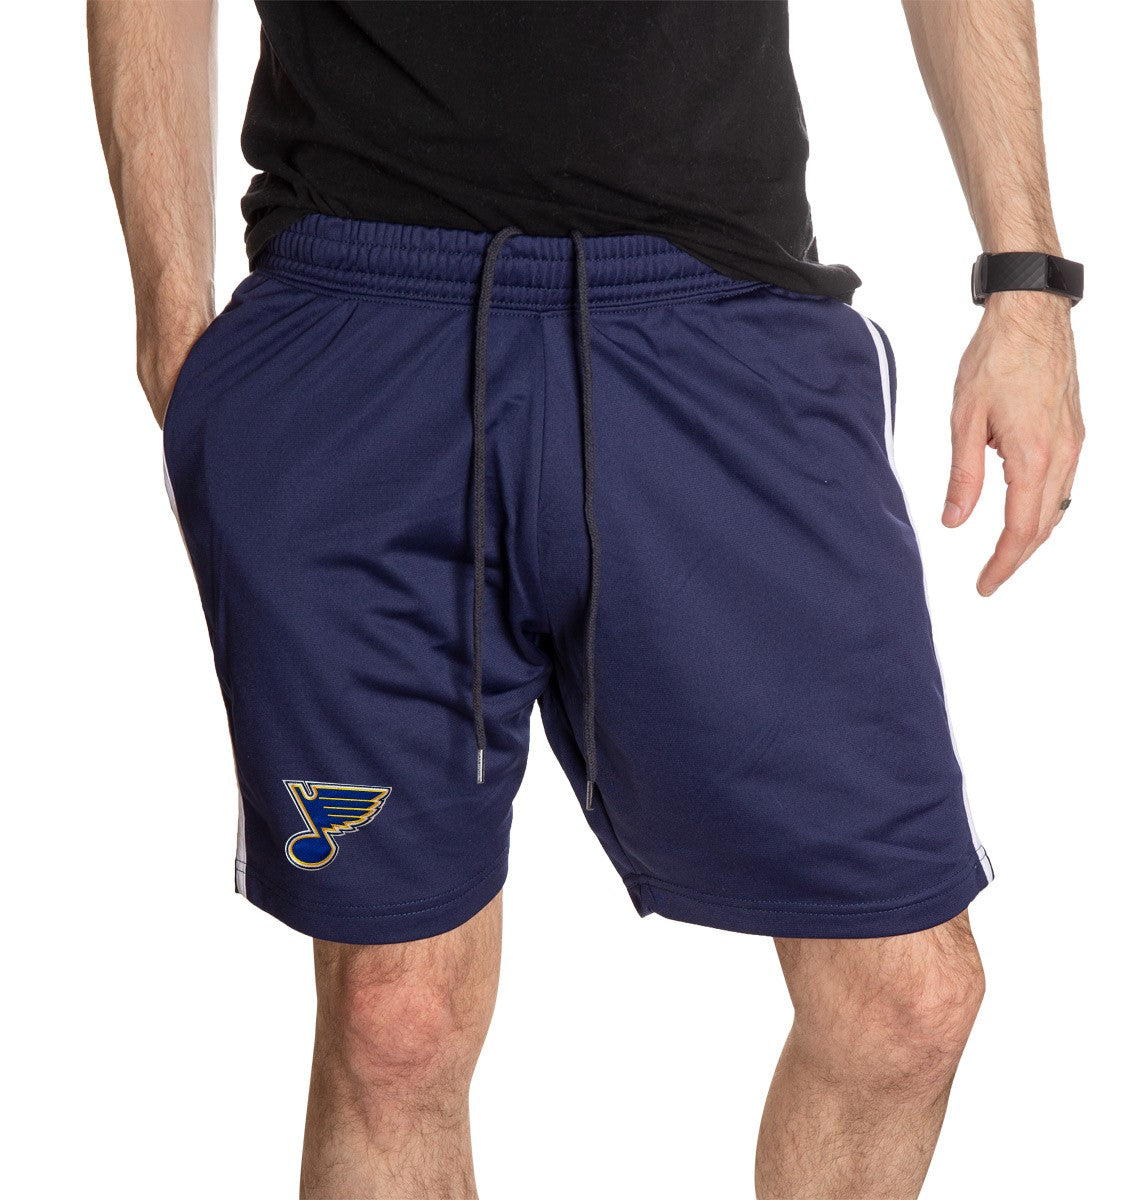 St. Louis Blues Two-Stripe Shorts for Men